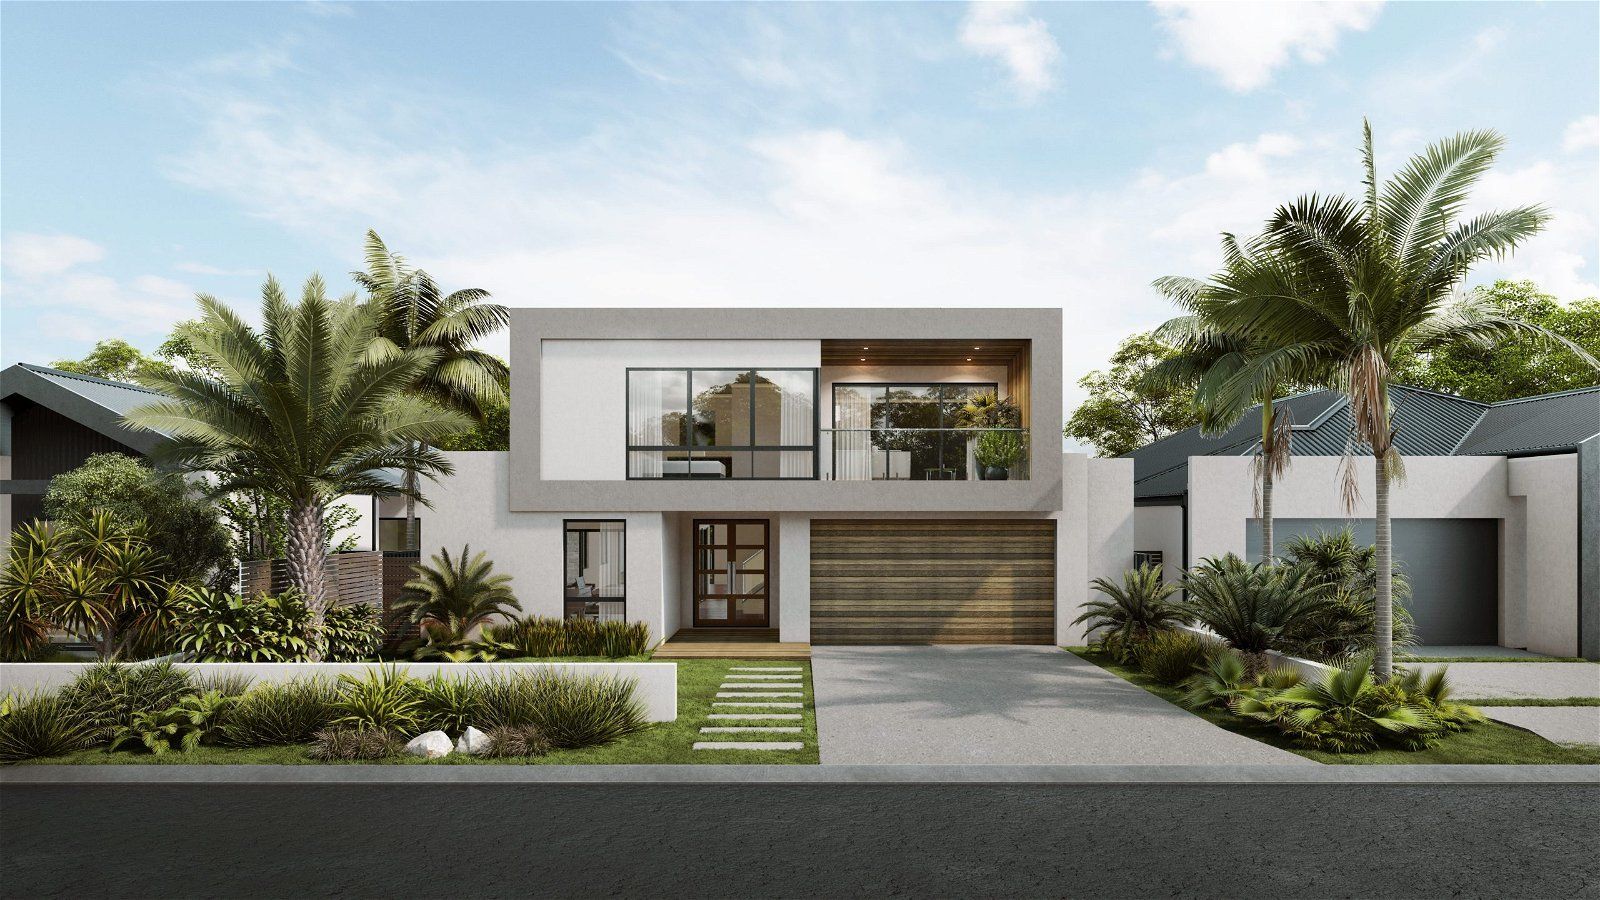 4 bedrooms New House & Land in Varadero Road BURNS BEACH WA, 6028